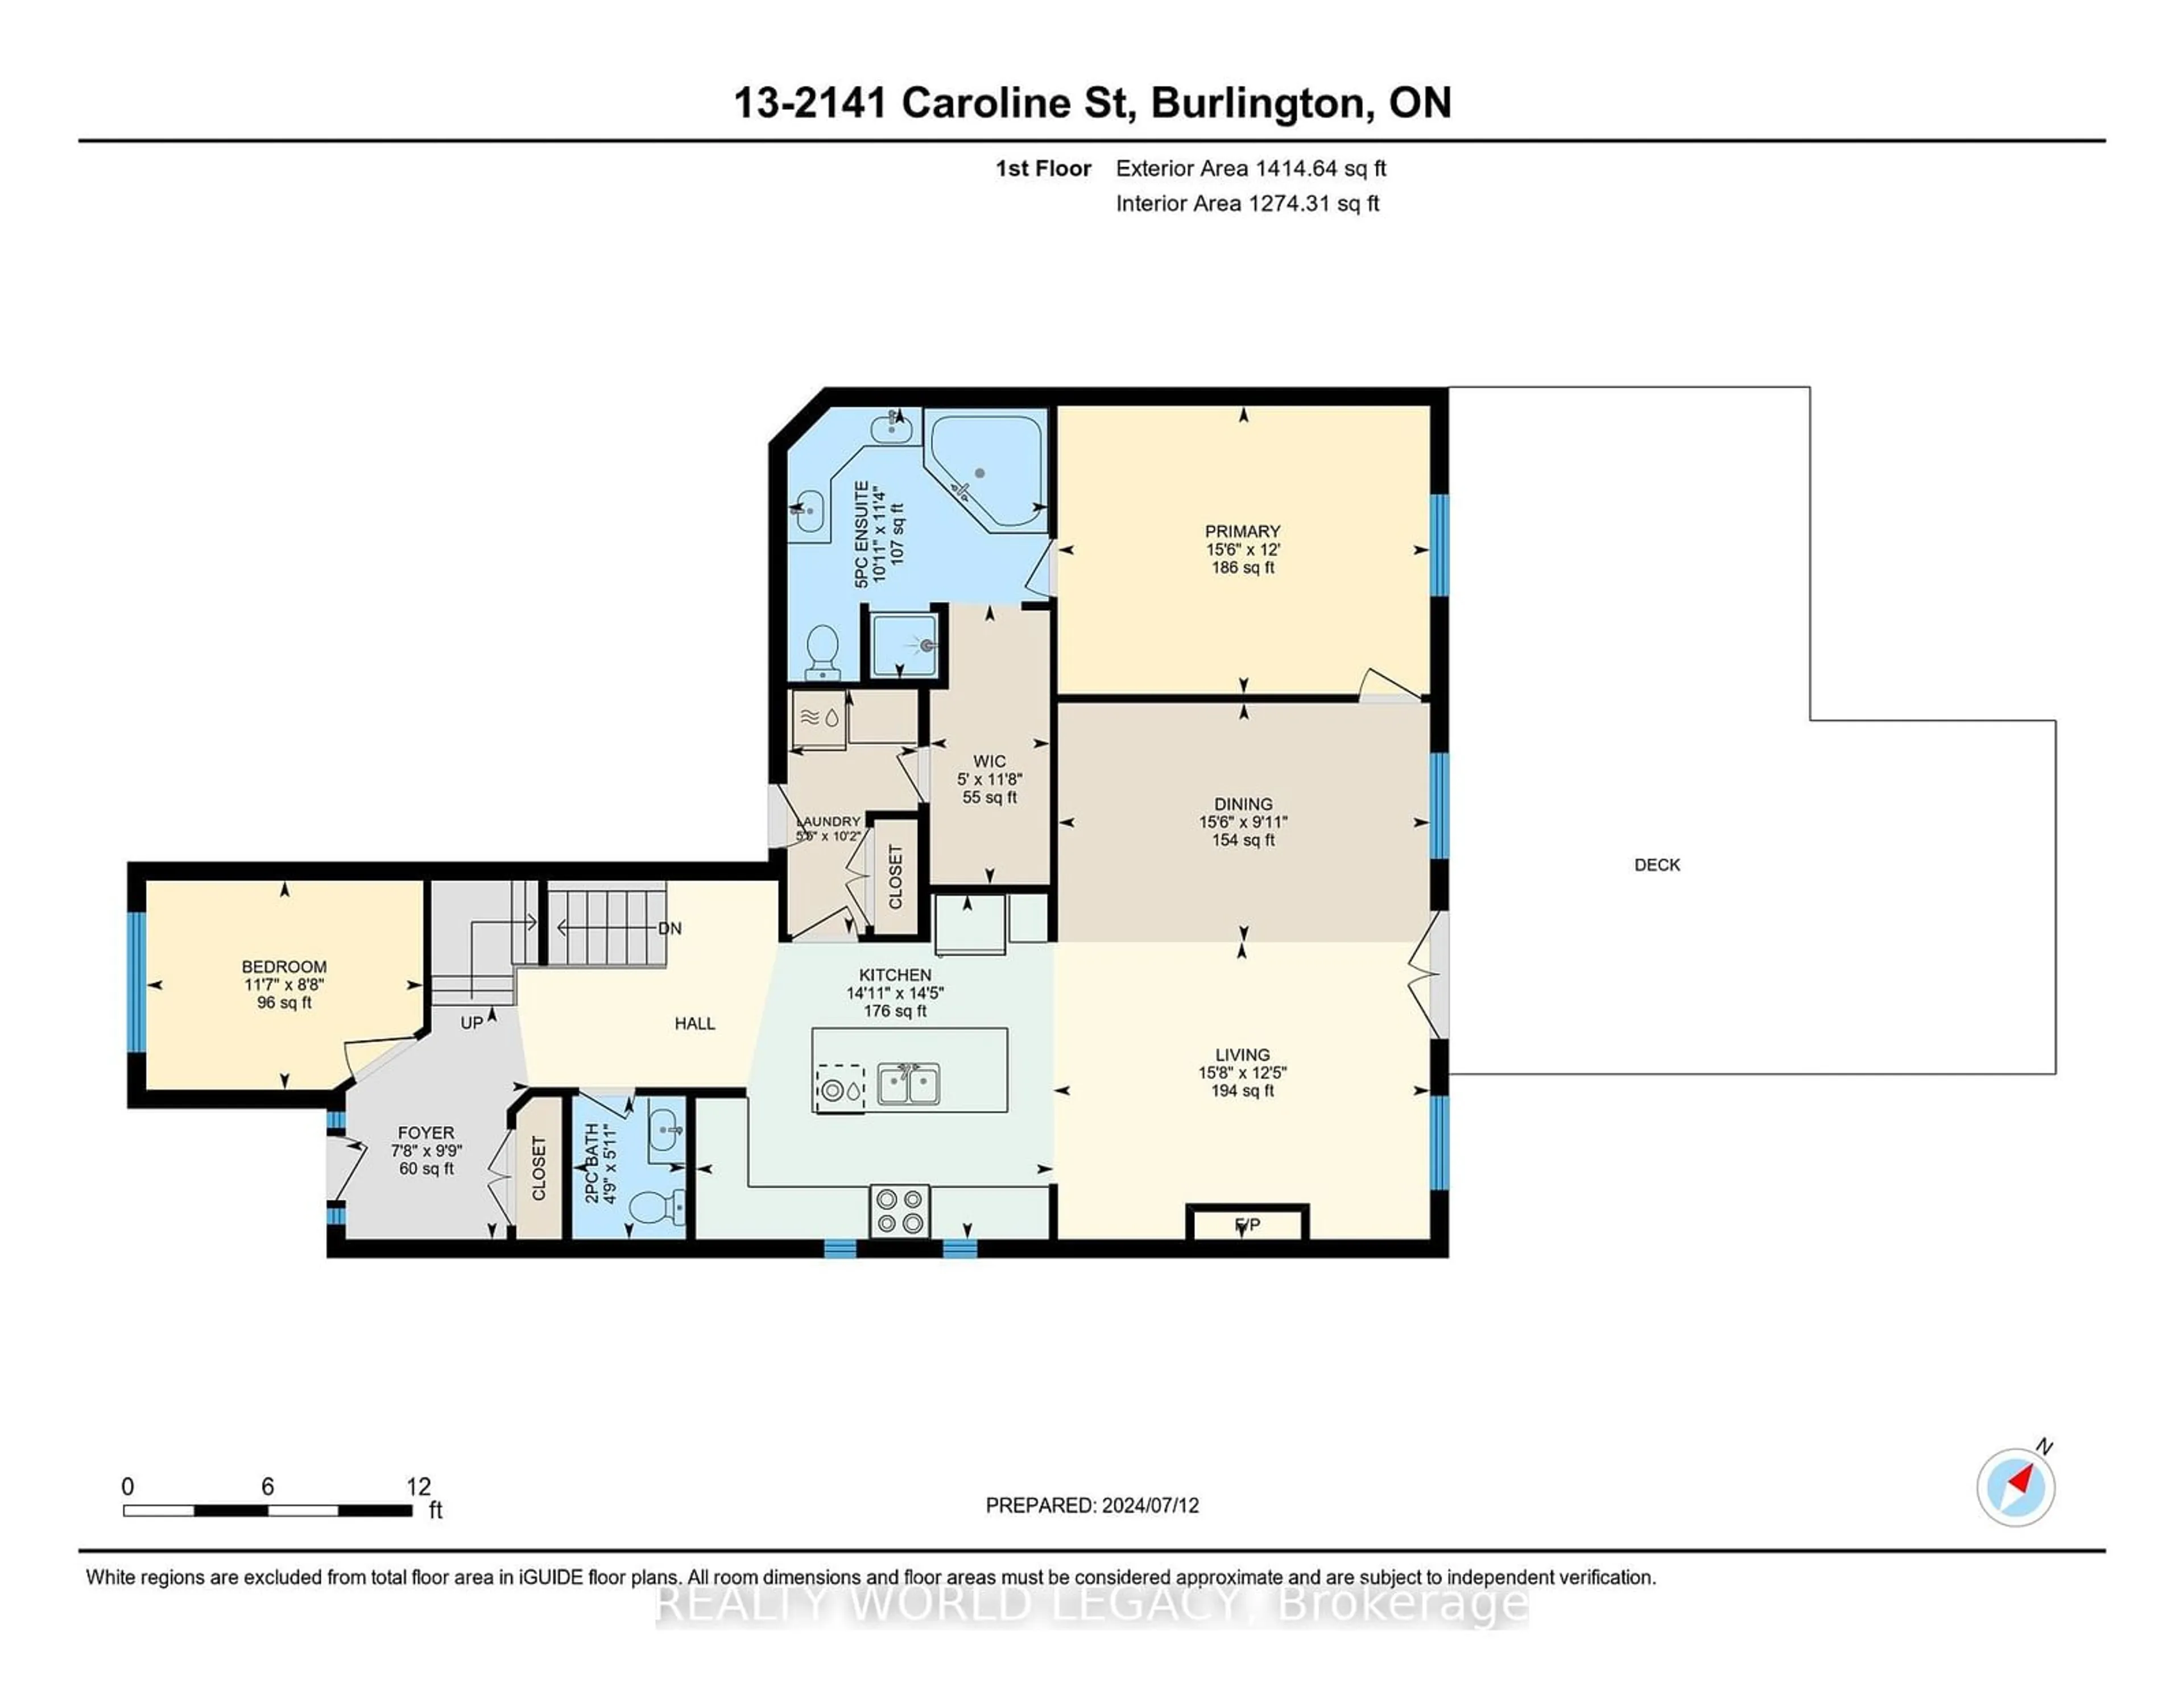 Floor plan for 2141 Caroline St #13, Burlington Ontario L7R 1L7